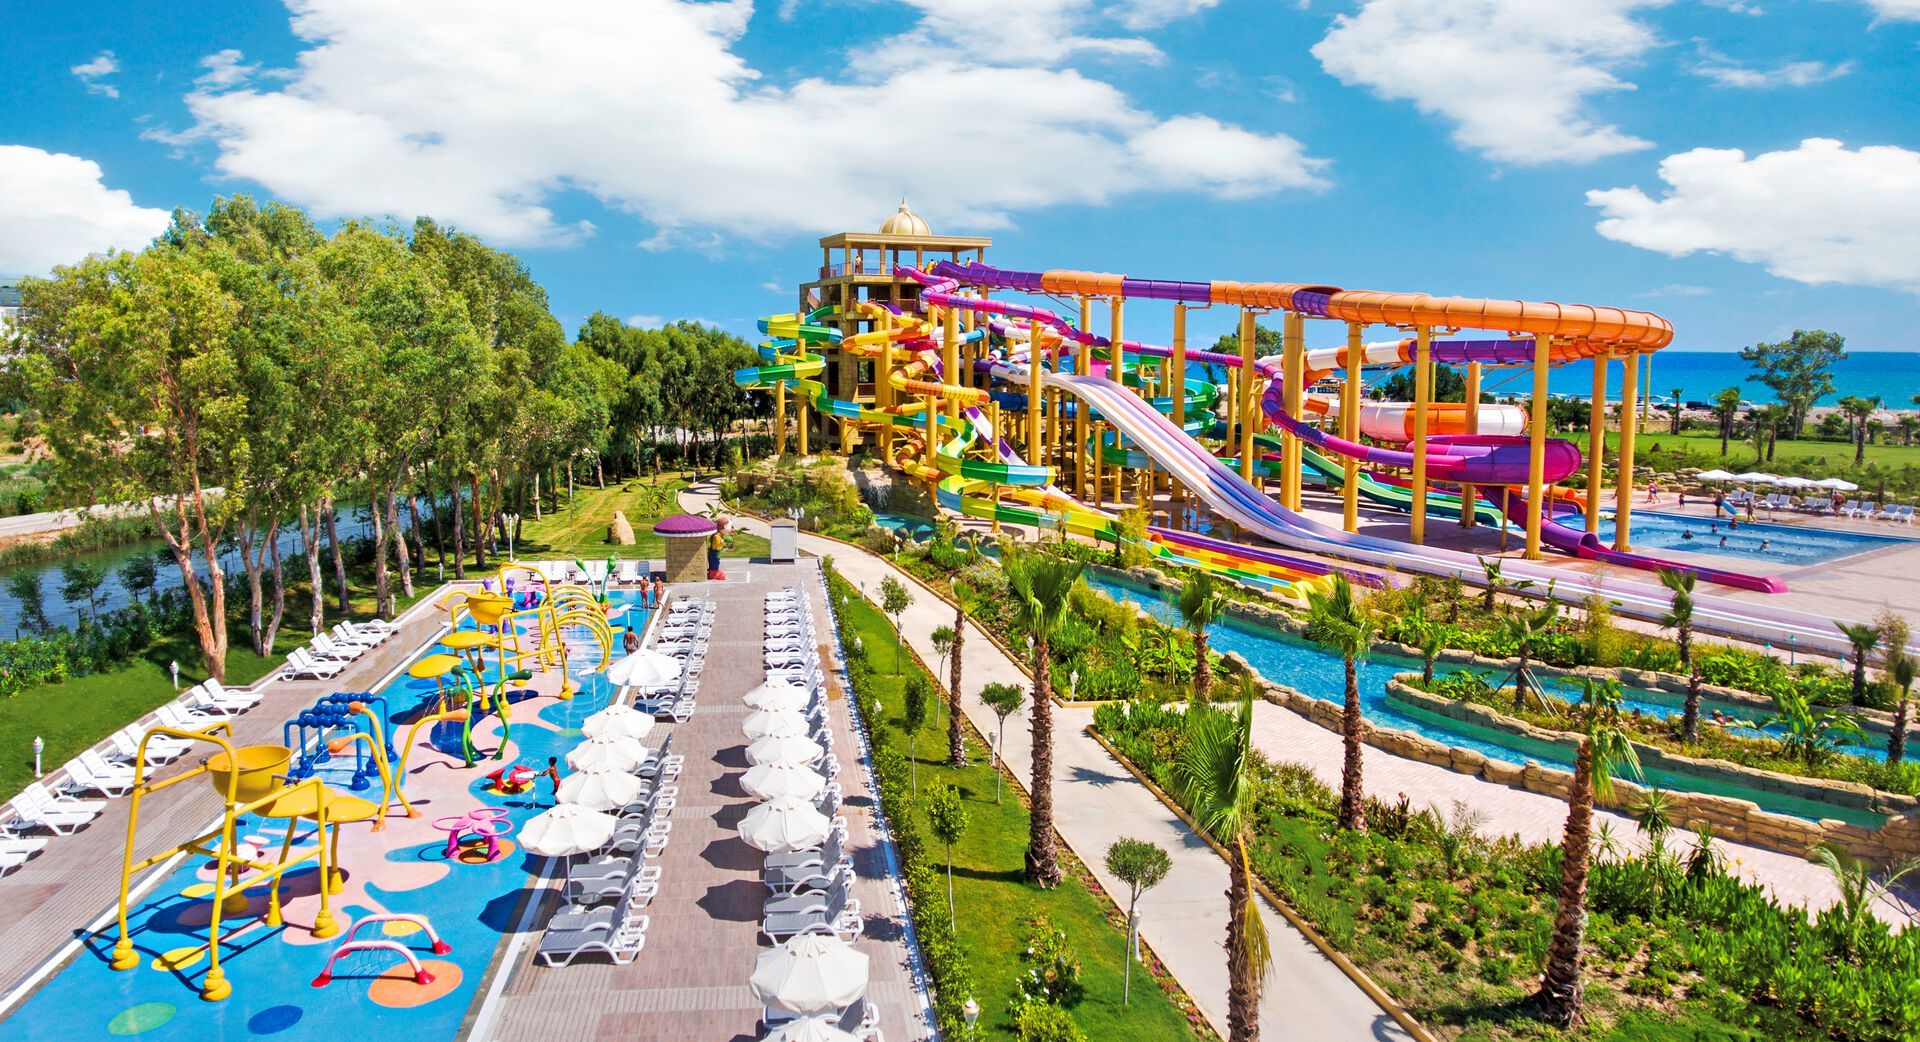 Turquie - Lara - Hôtel Delphin BE Grand Resort 5*